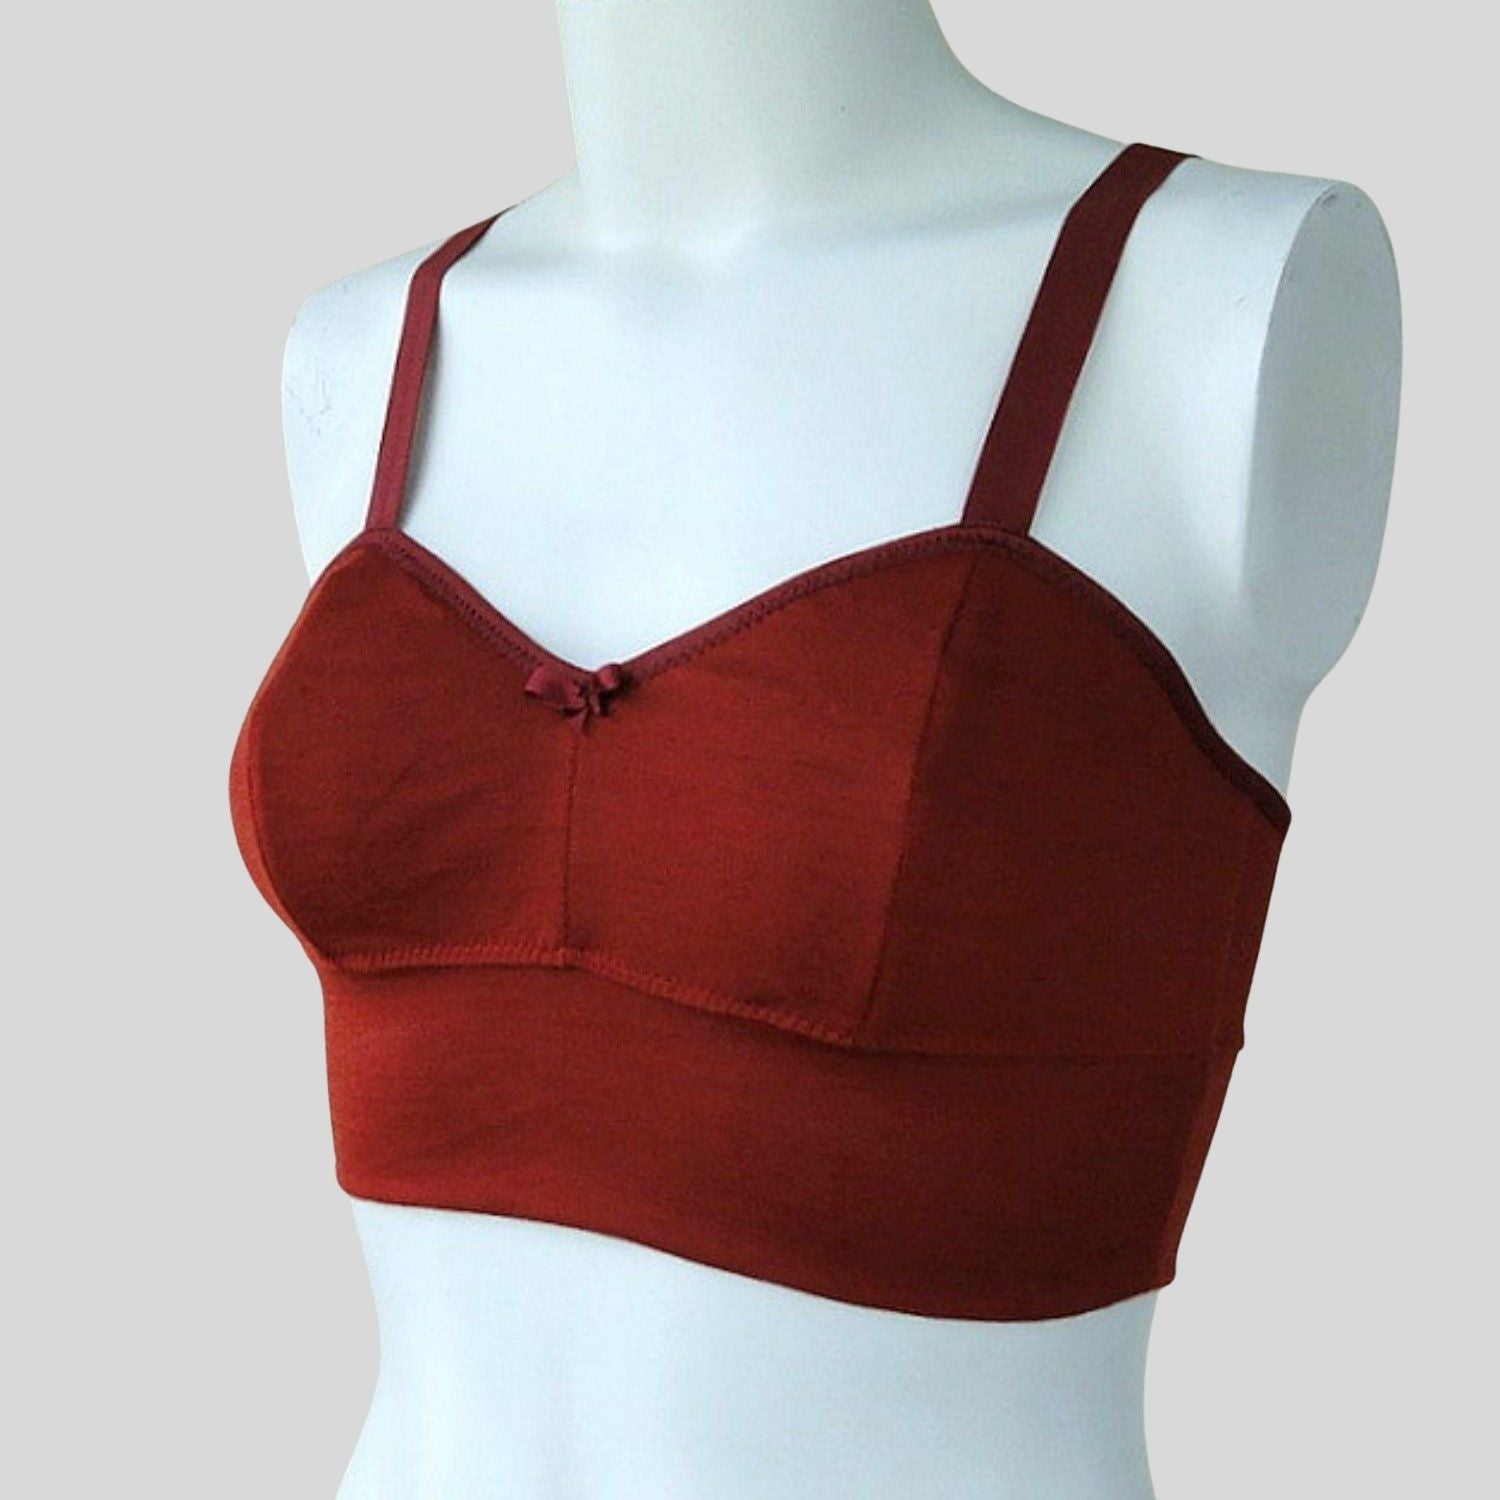 Red wool bra | Shop Wool underwear and bra for women | Made in Canada wool underwear shop